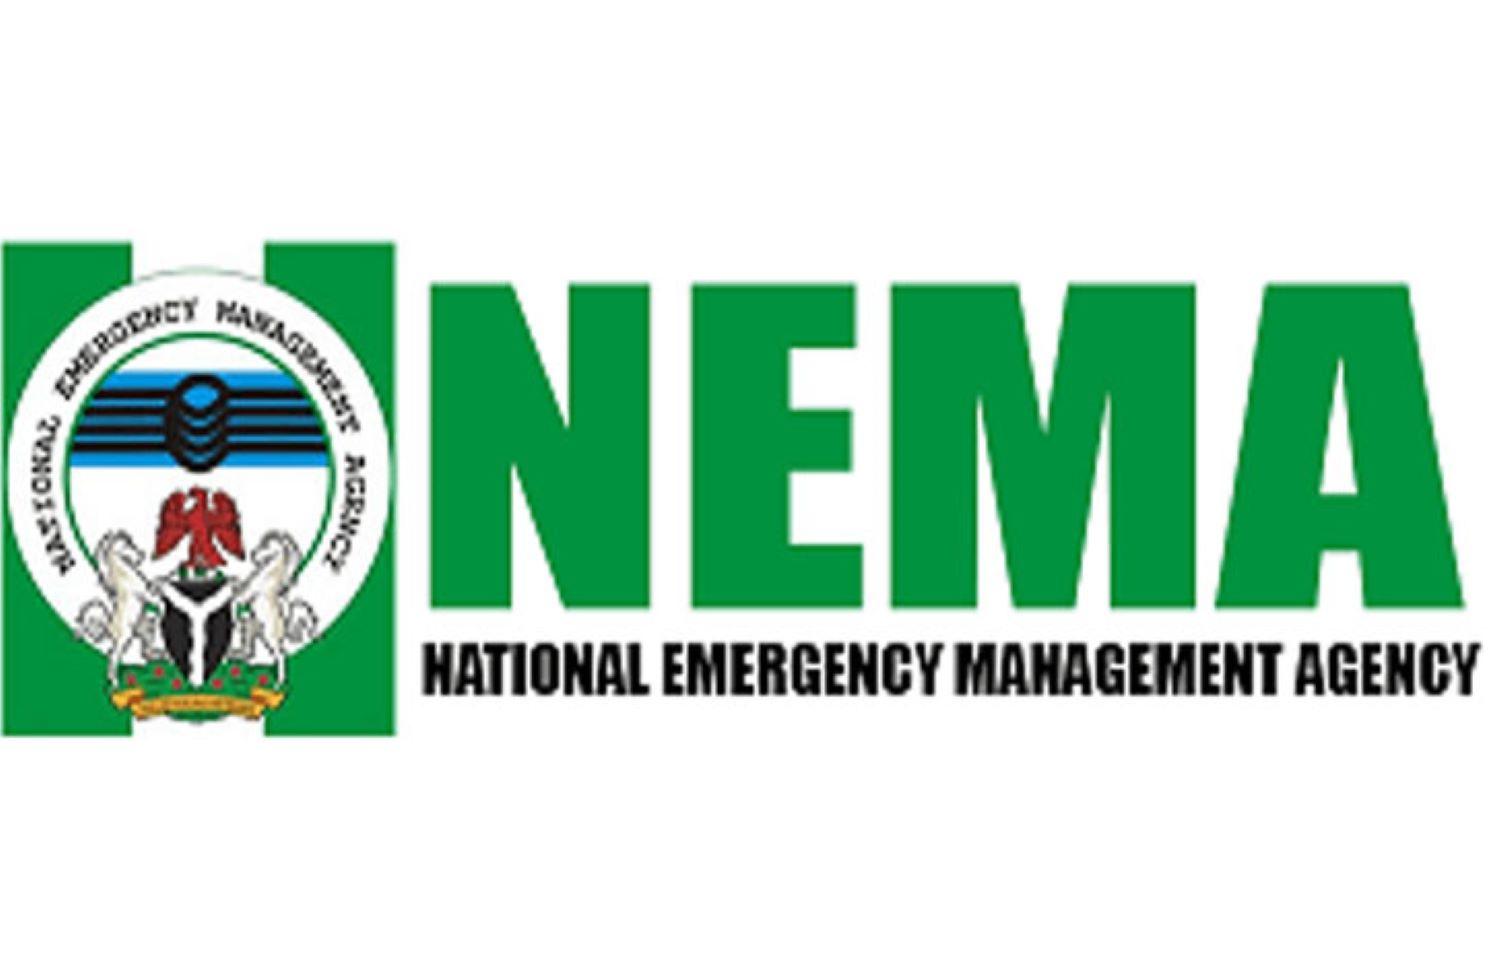 NEMA 1 New NEMA D-G assumes office in Abuja